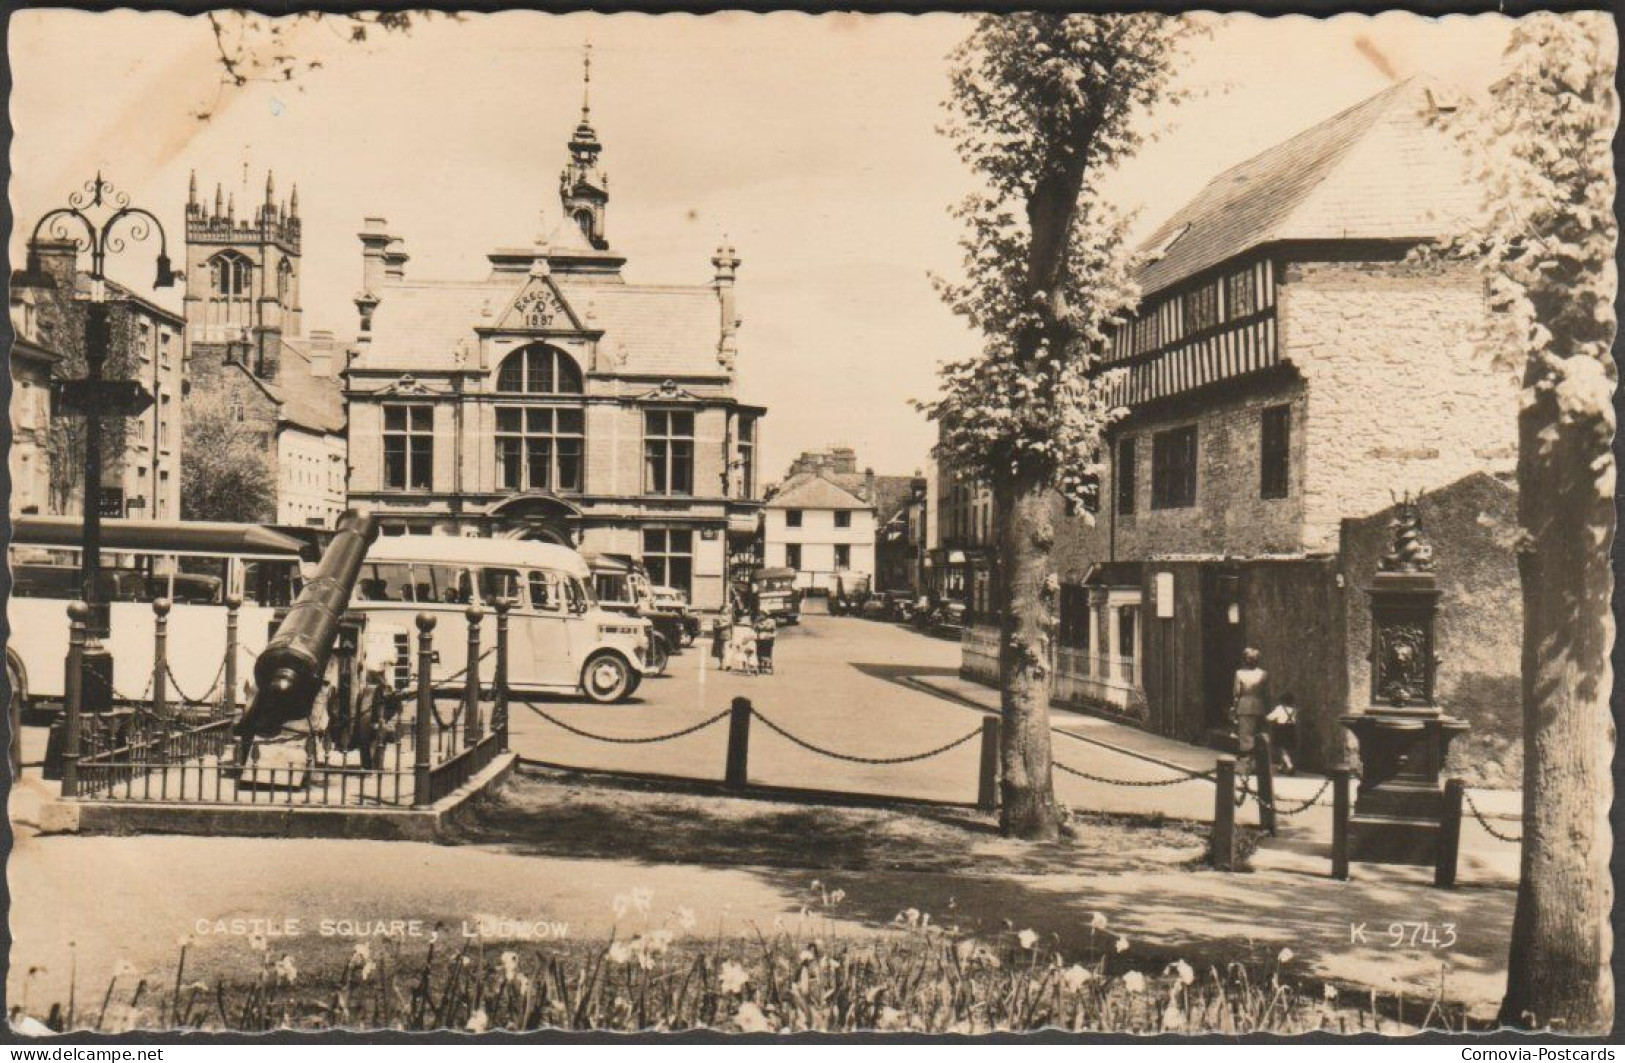 Castle Square, Ludlow, Shropshire, 1959 - Valentine's RP Postcard - Shropshire